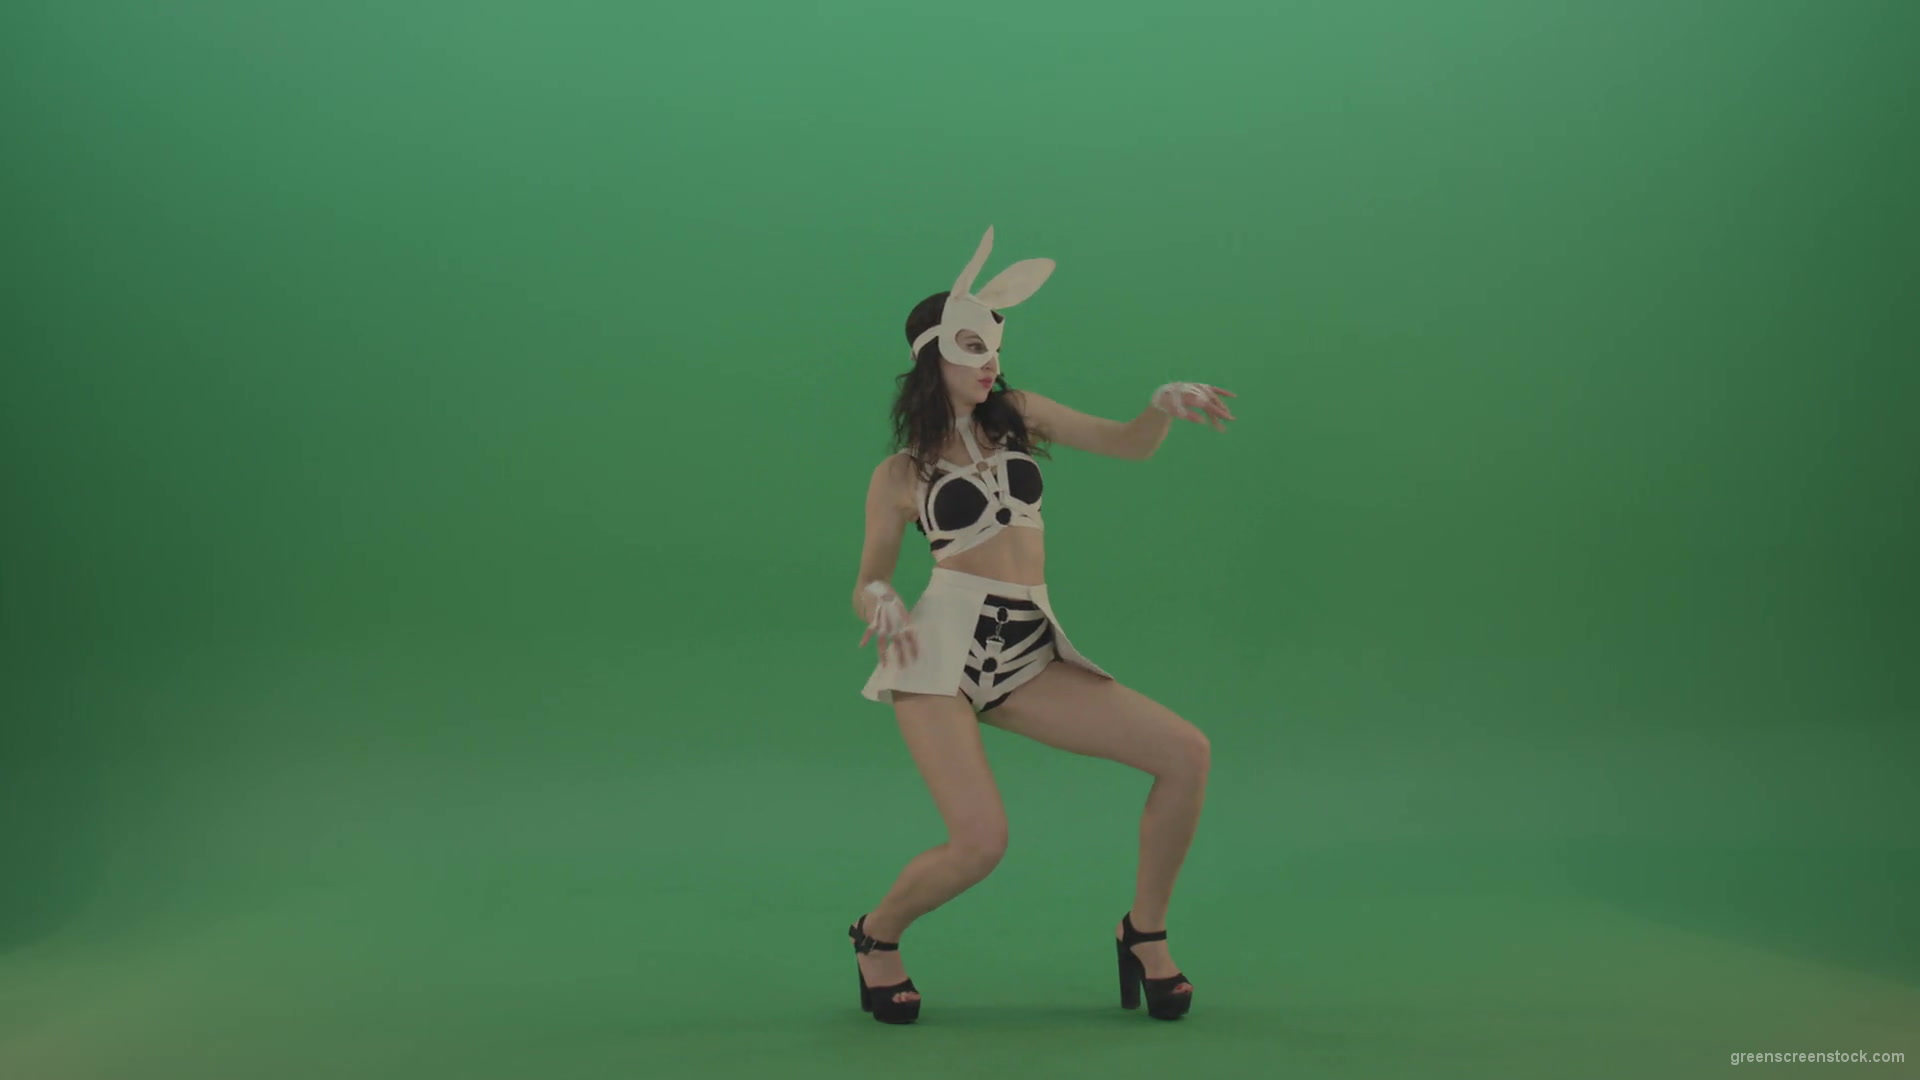 Sexy-posing-Bunny-Girl-dancing-Go-Go-Rabbit-Dance-over-Green-Screen-1920_005 Green Screen Stock